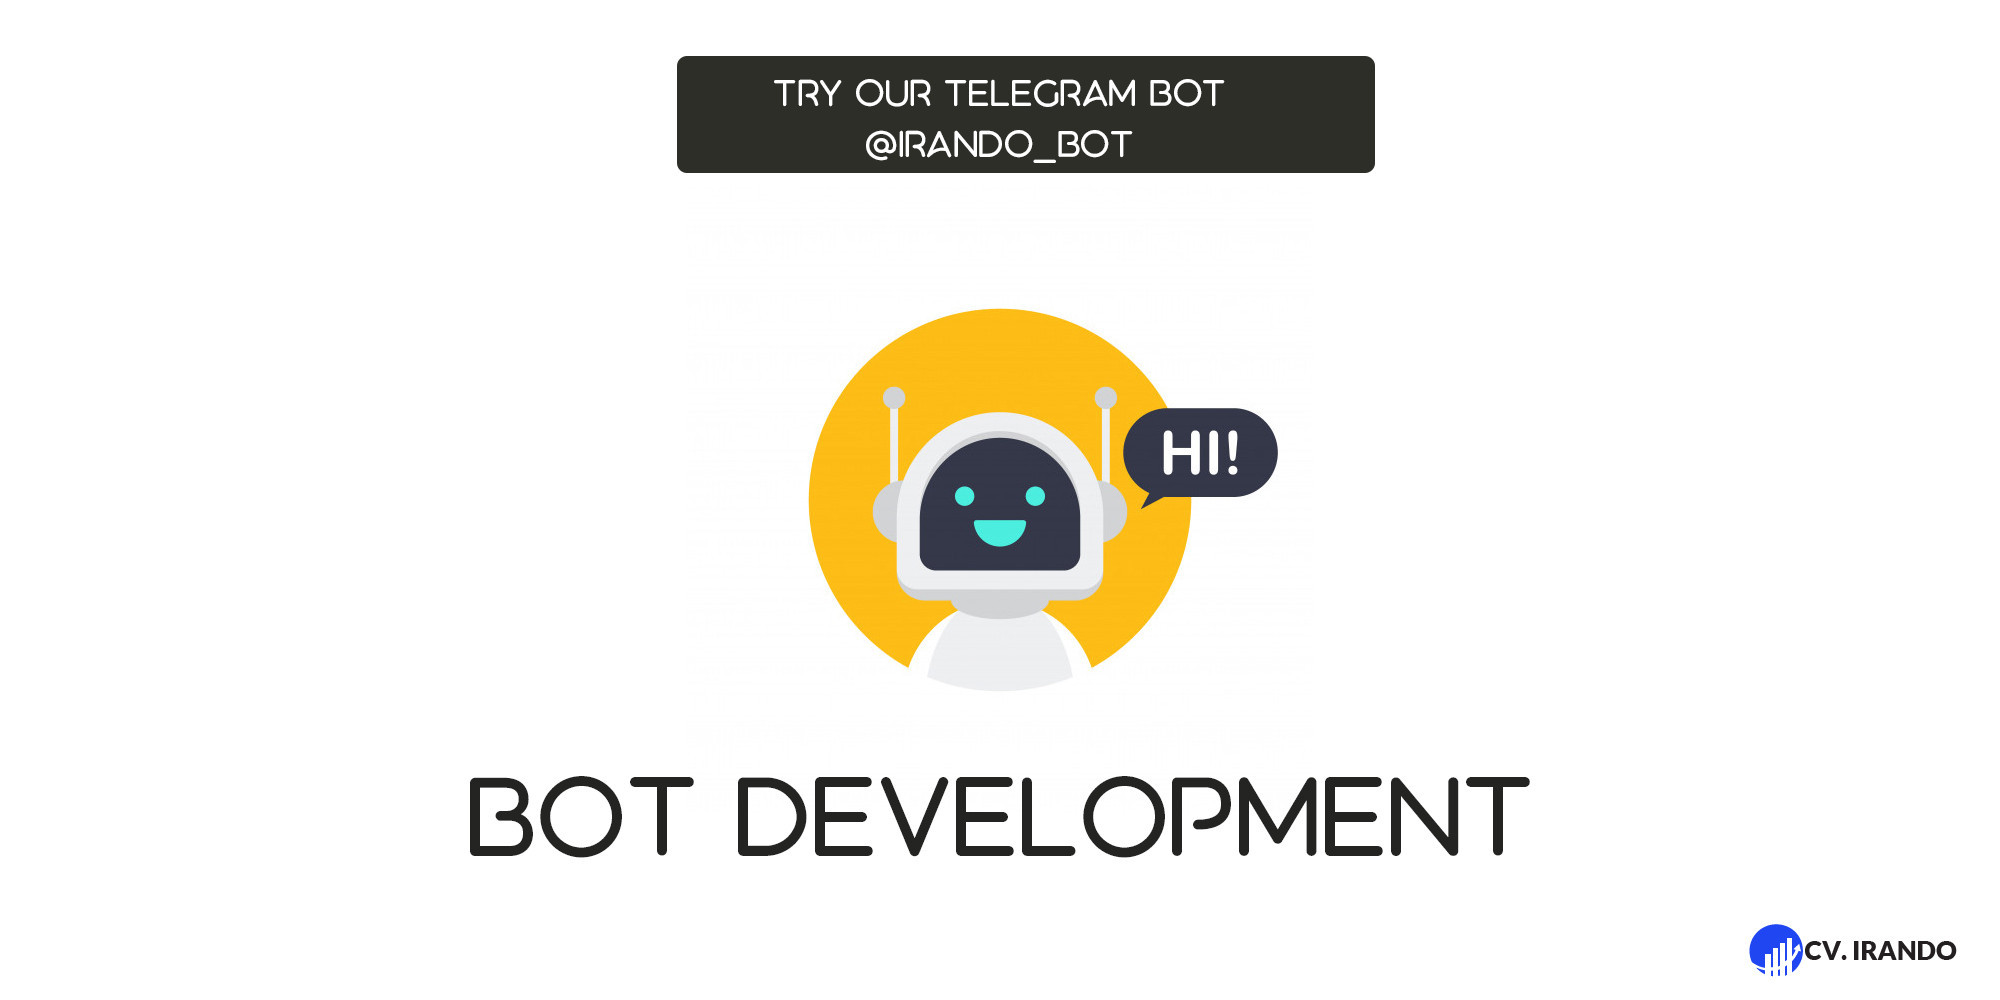 How to make telegram bot - Part 1